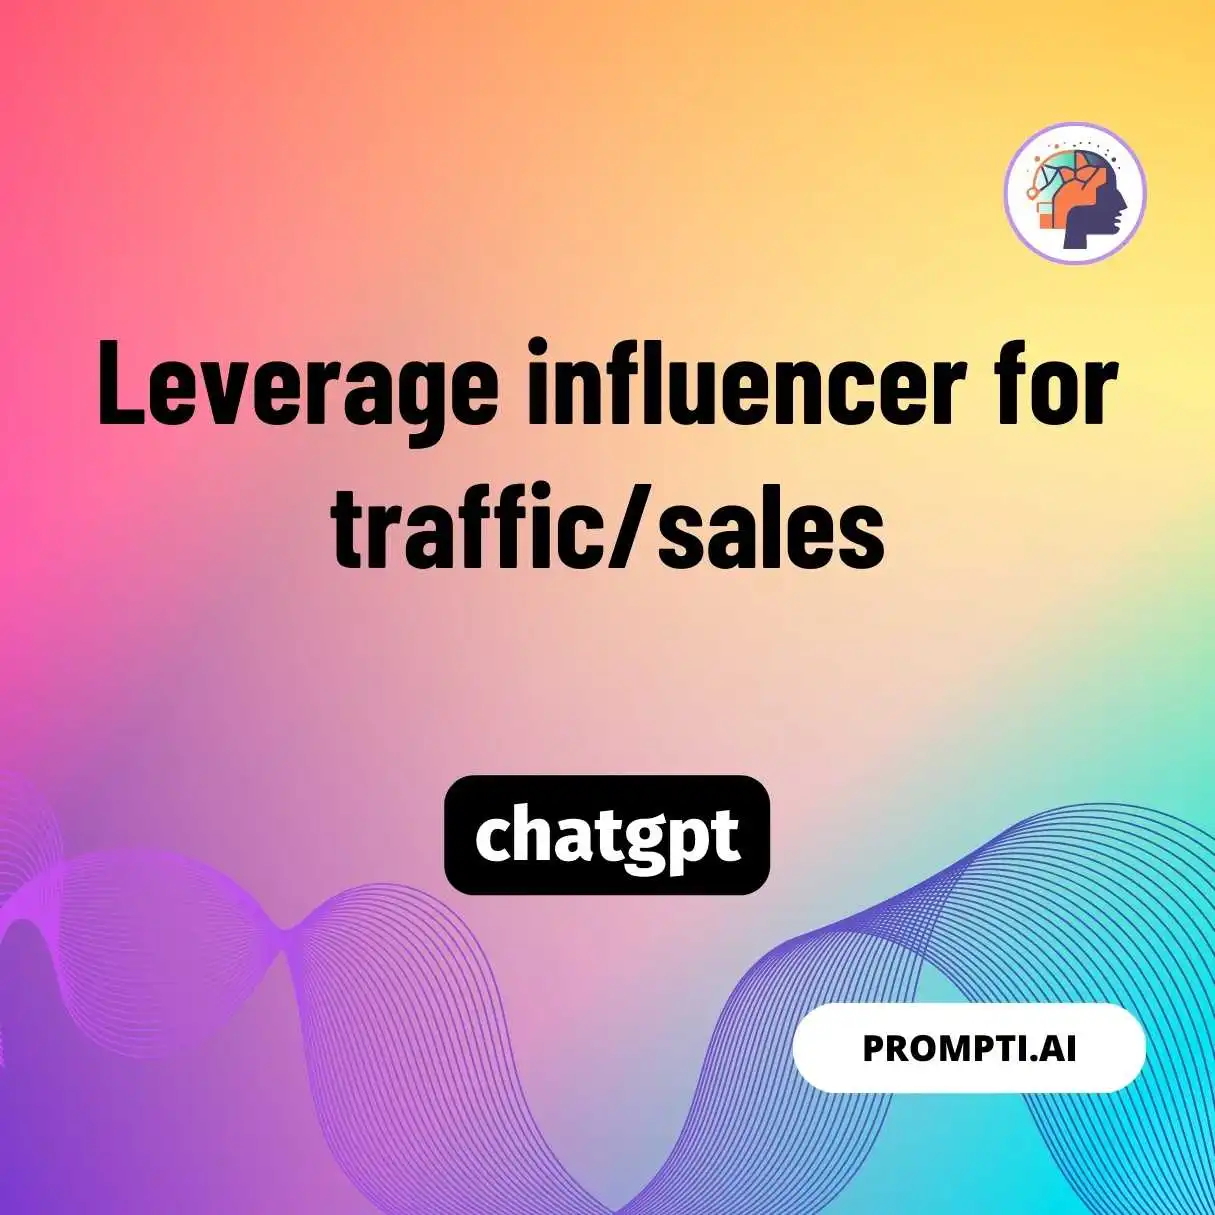 Leverage influencer for traffic/sales